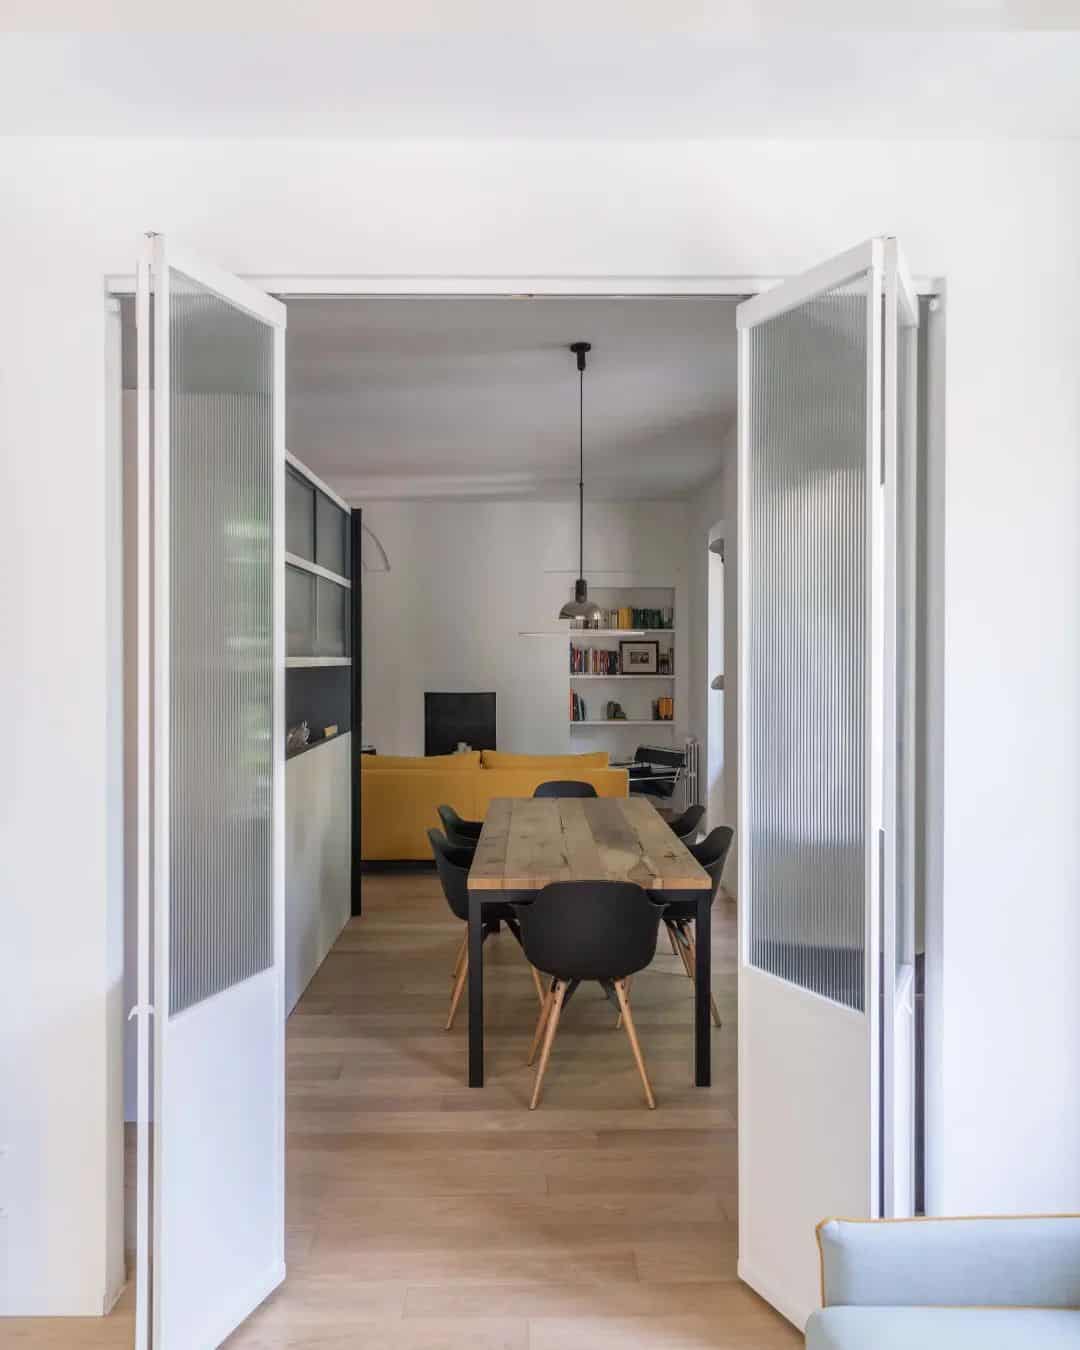 How Do You Install Pella Bi-fold Patio Doors in Your House?